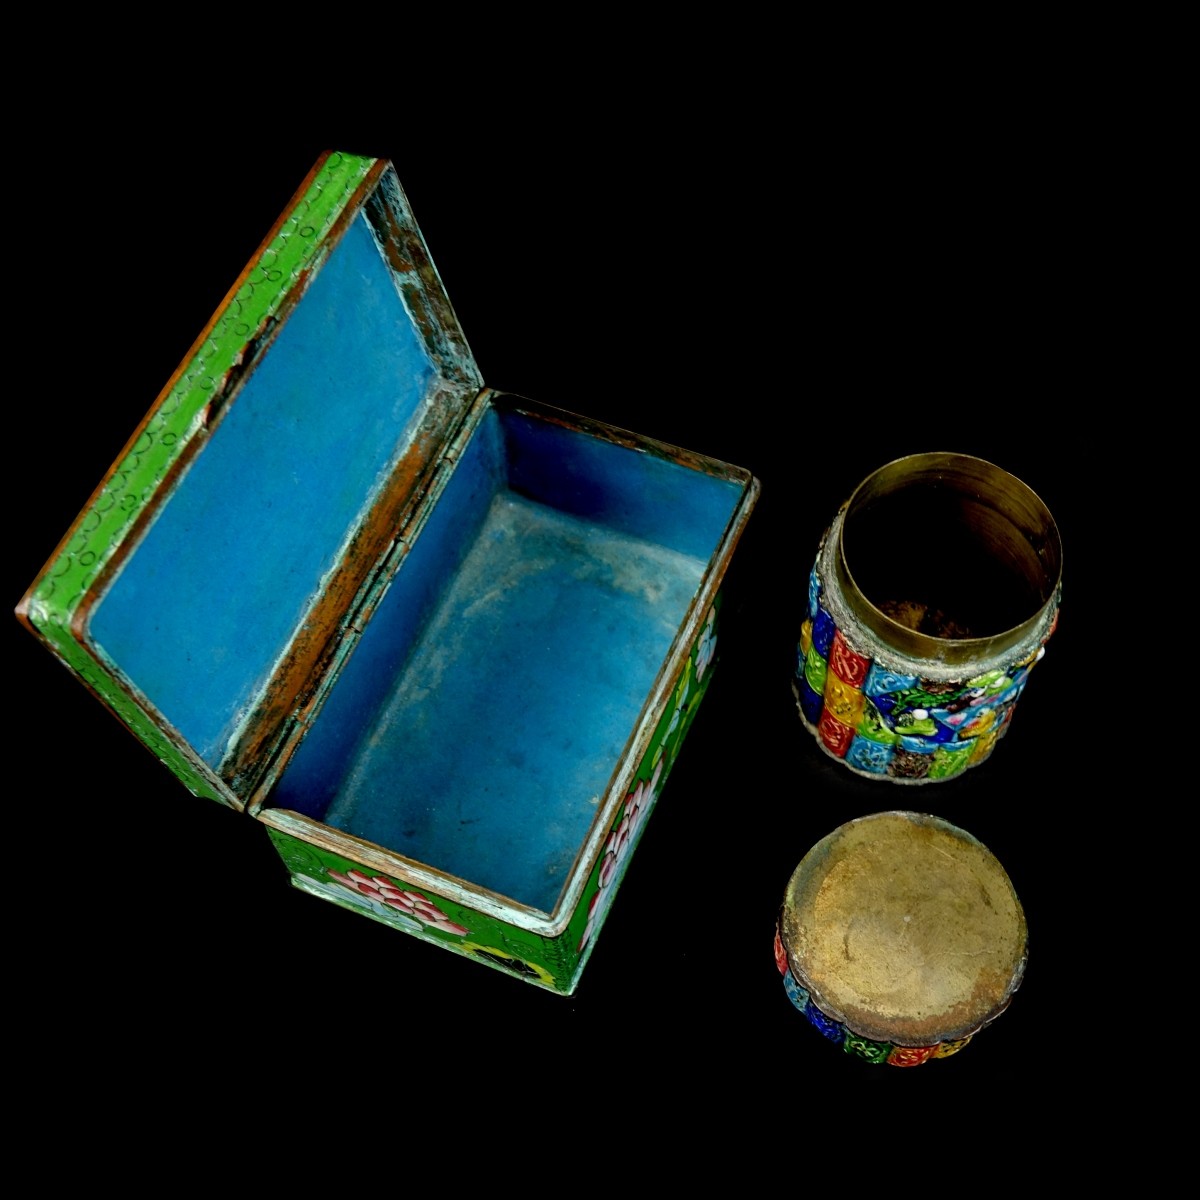 Chinese Cloisonne Box and Chinese Enamel Jar